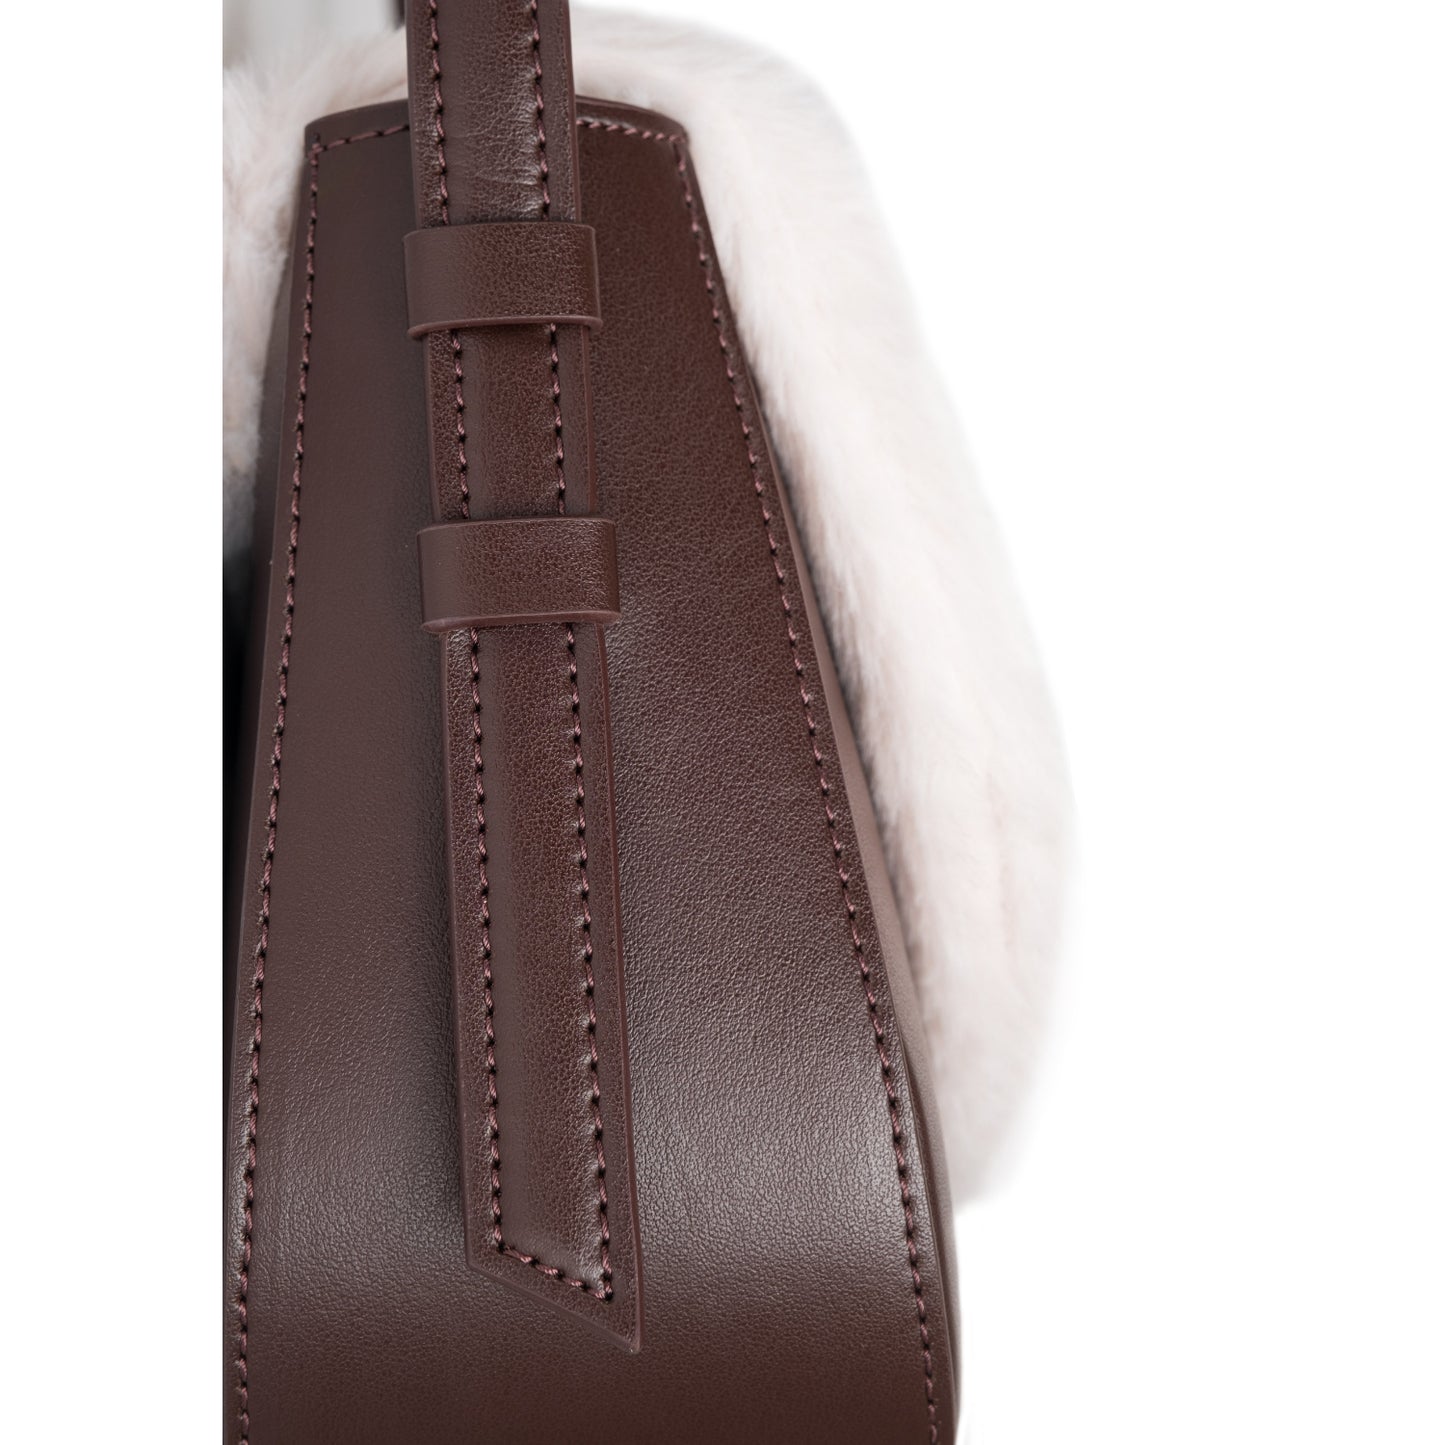 GALA Vegan Apple Leather Faux Fur Crossbody Bag White/Brown